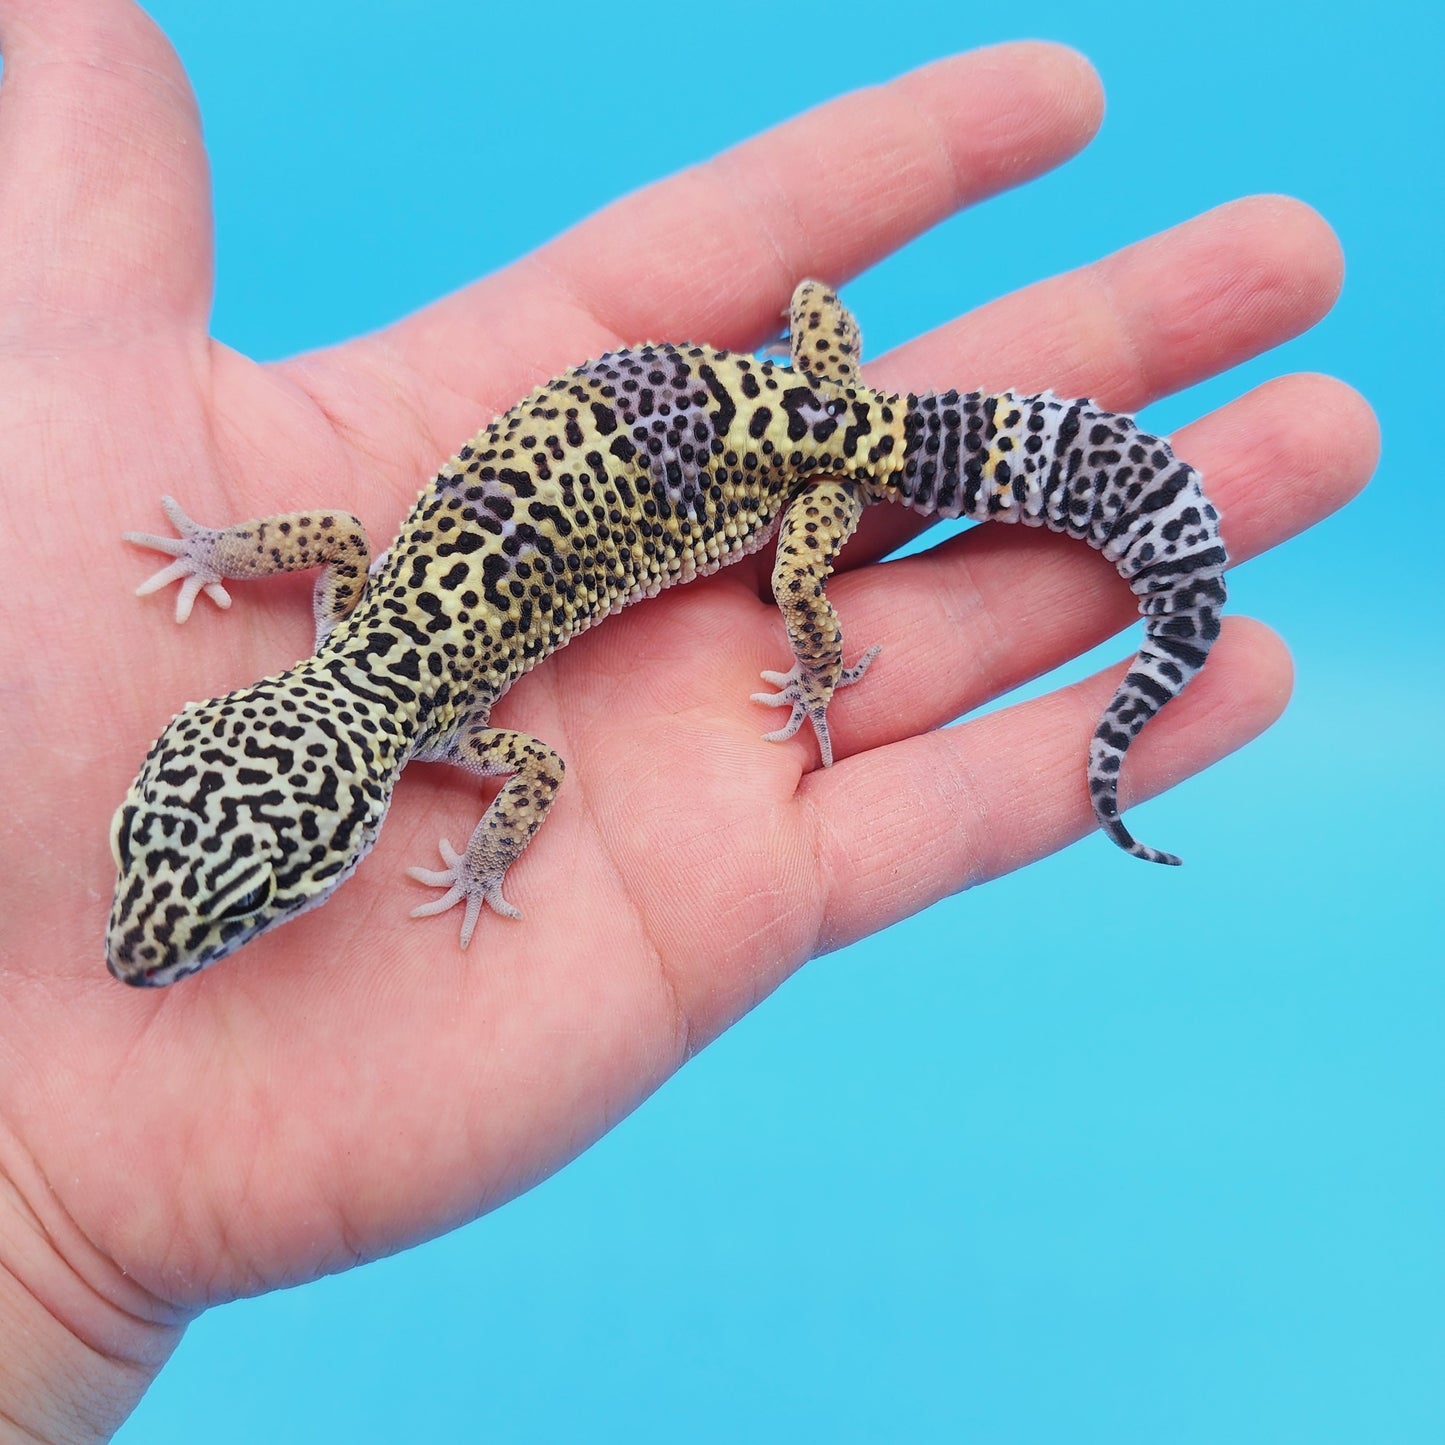 Female Black Night (50%) Afghan (25%) Turcmenicus (25%) Leopard Gecko